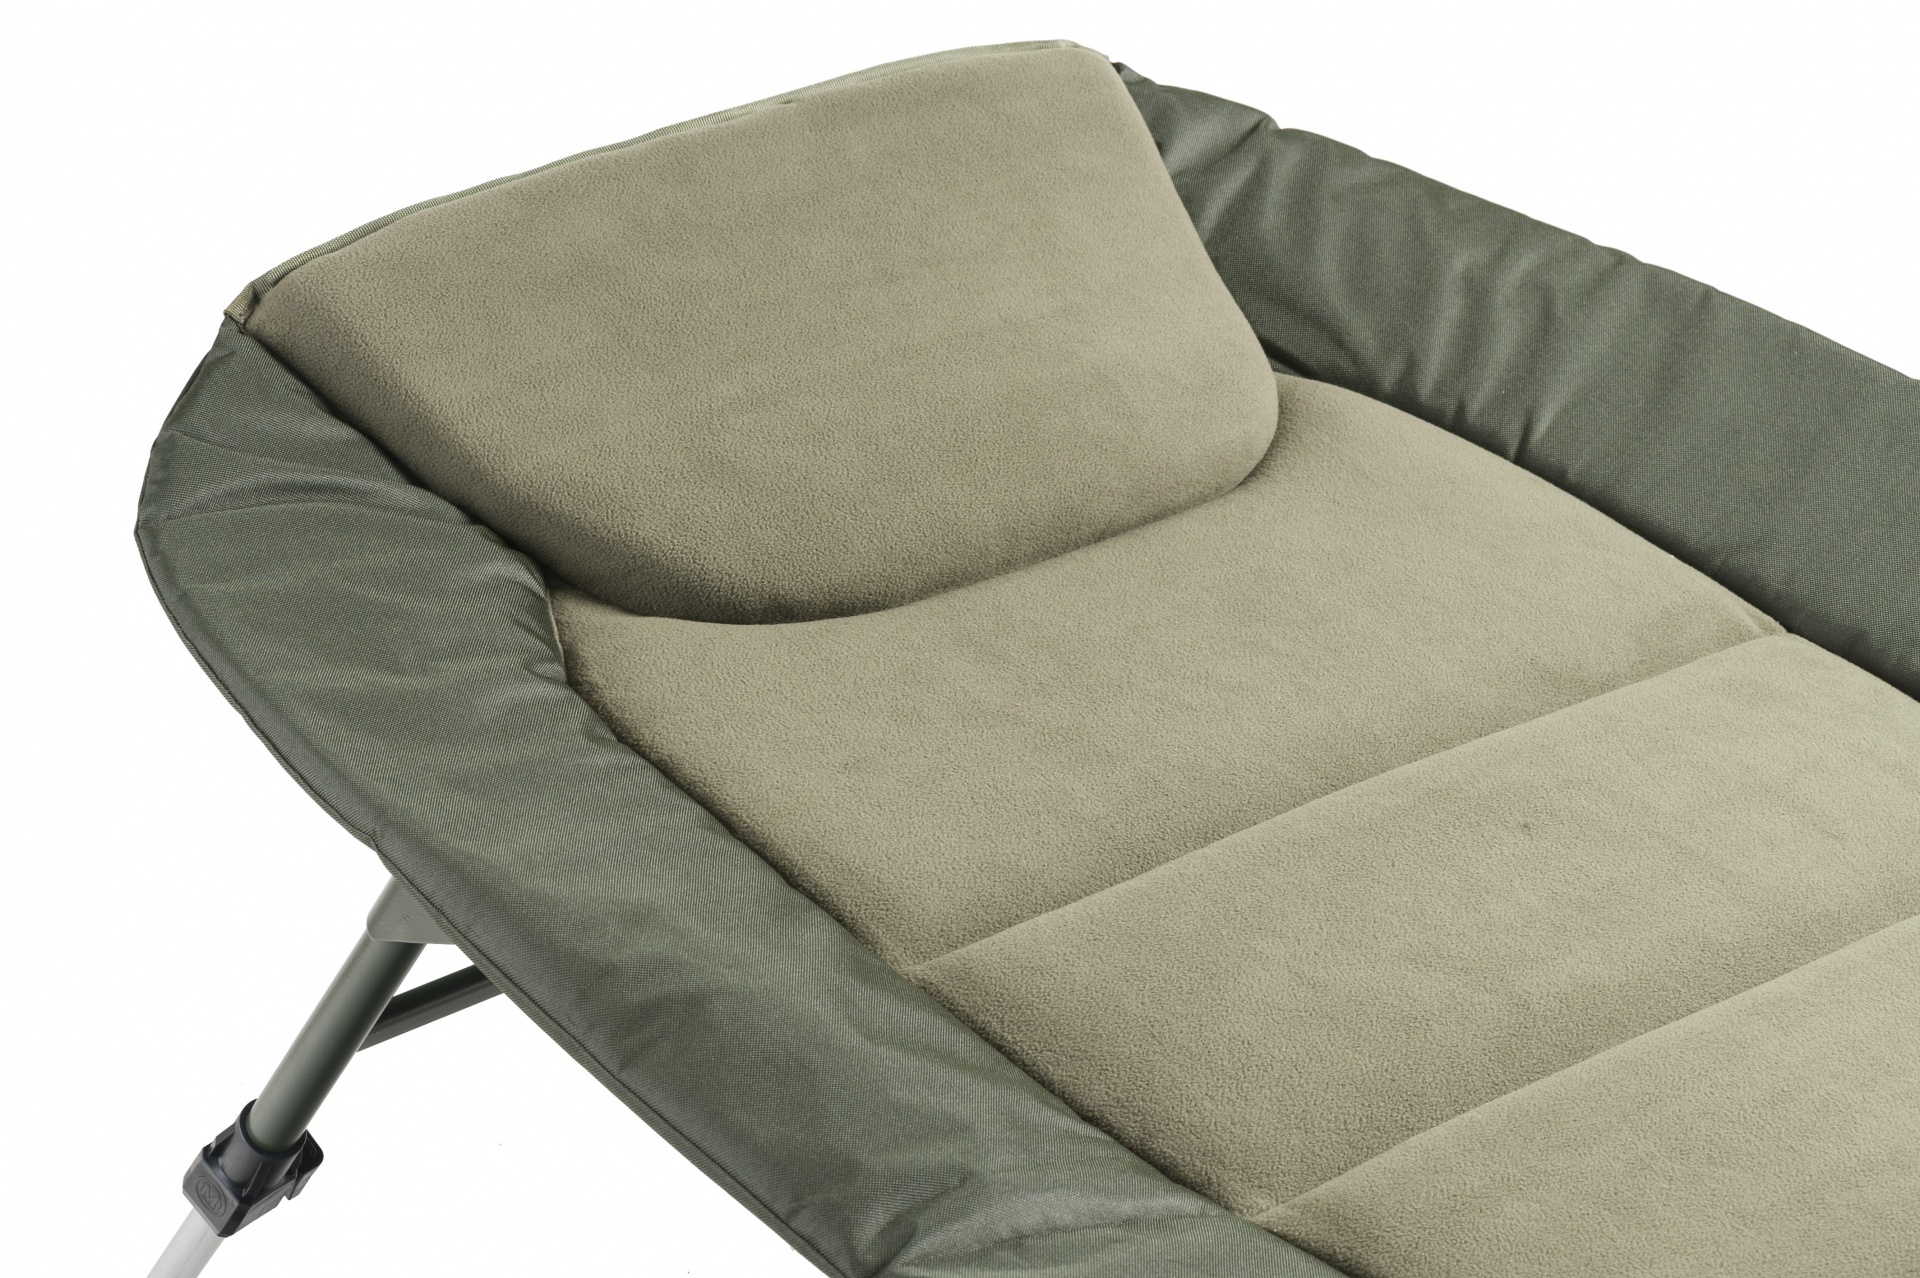 Mivardi Bedchair Comfort XL6